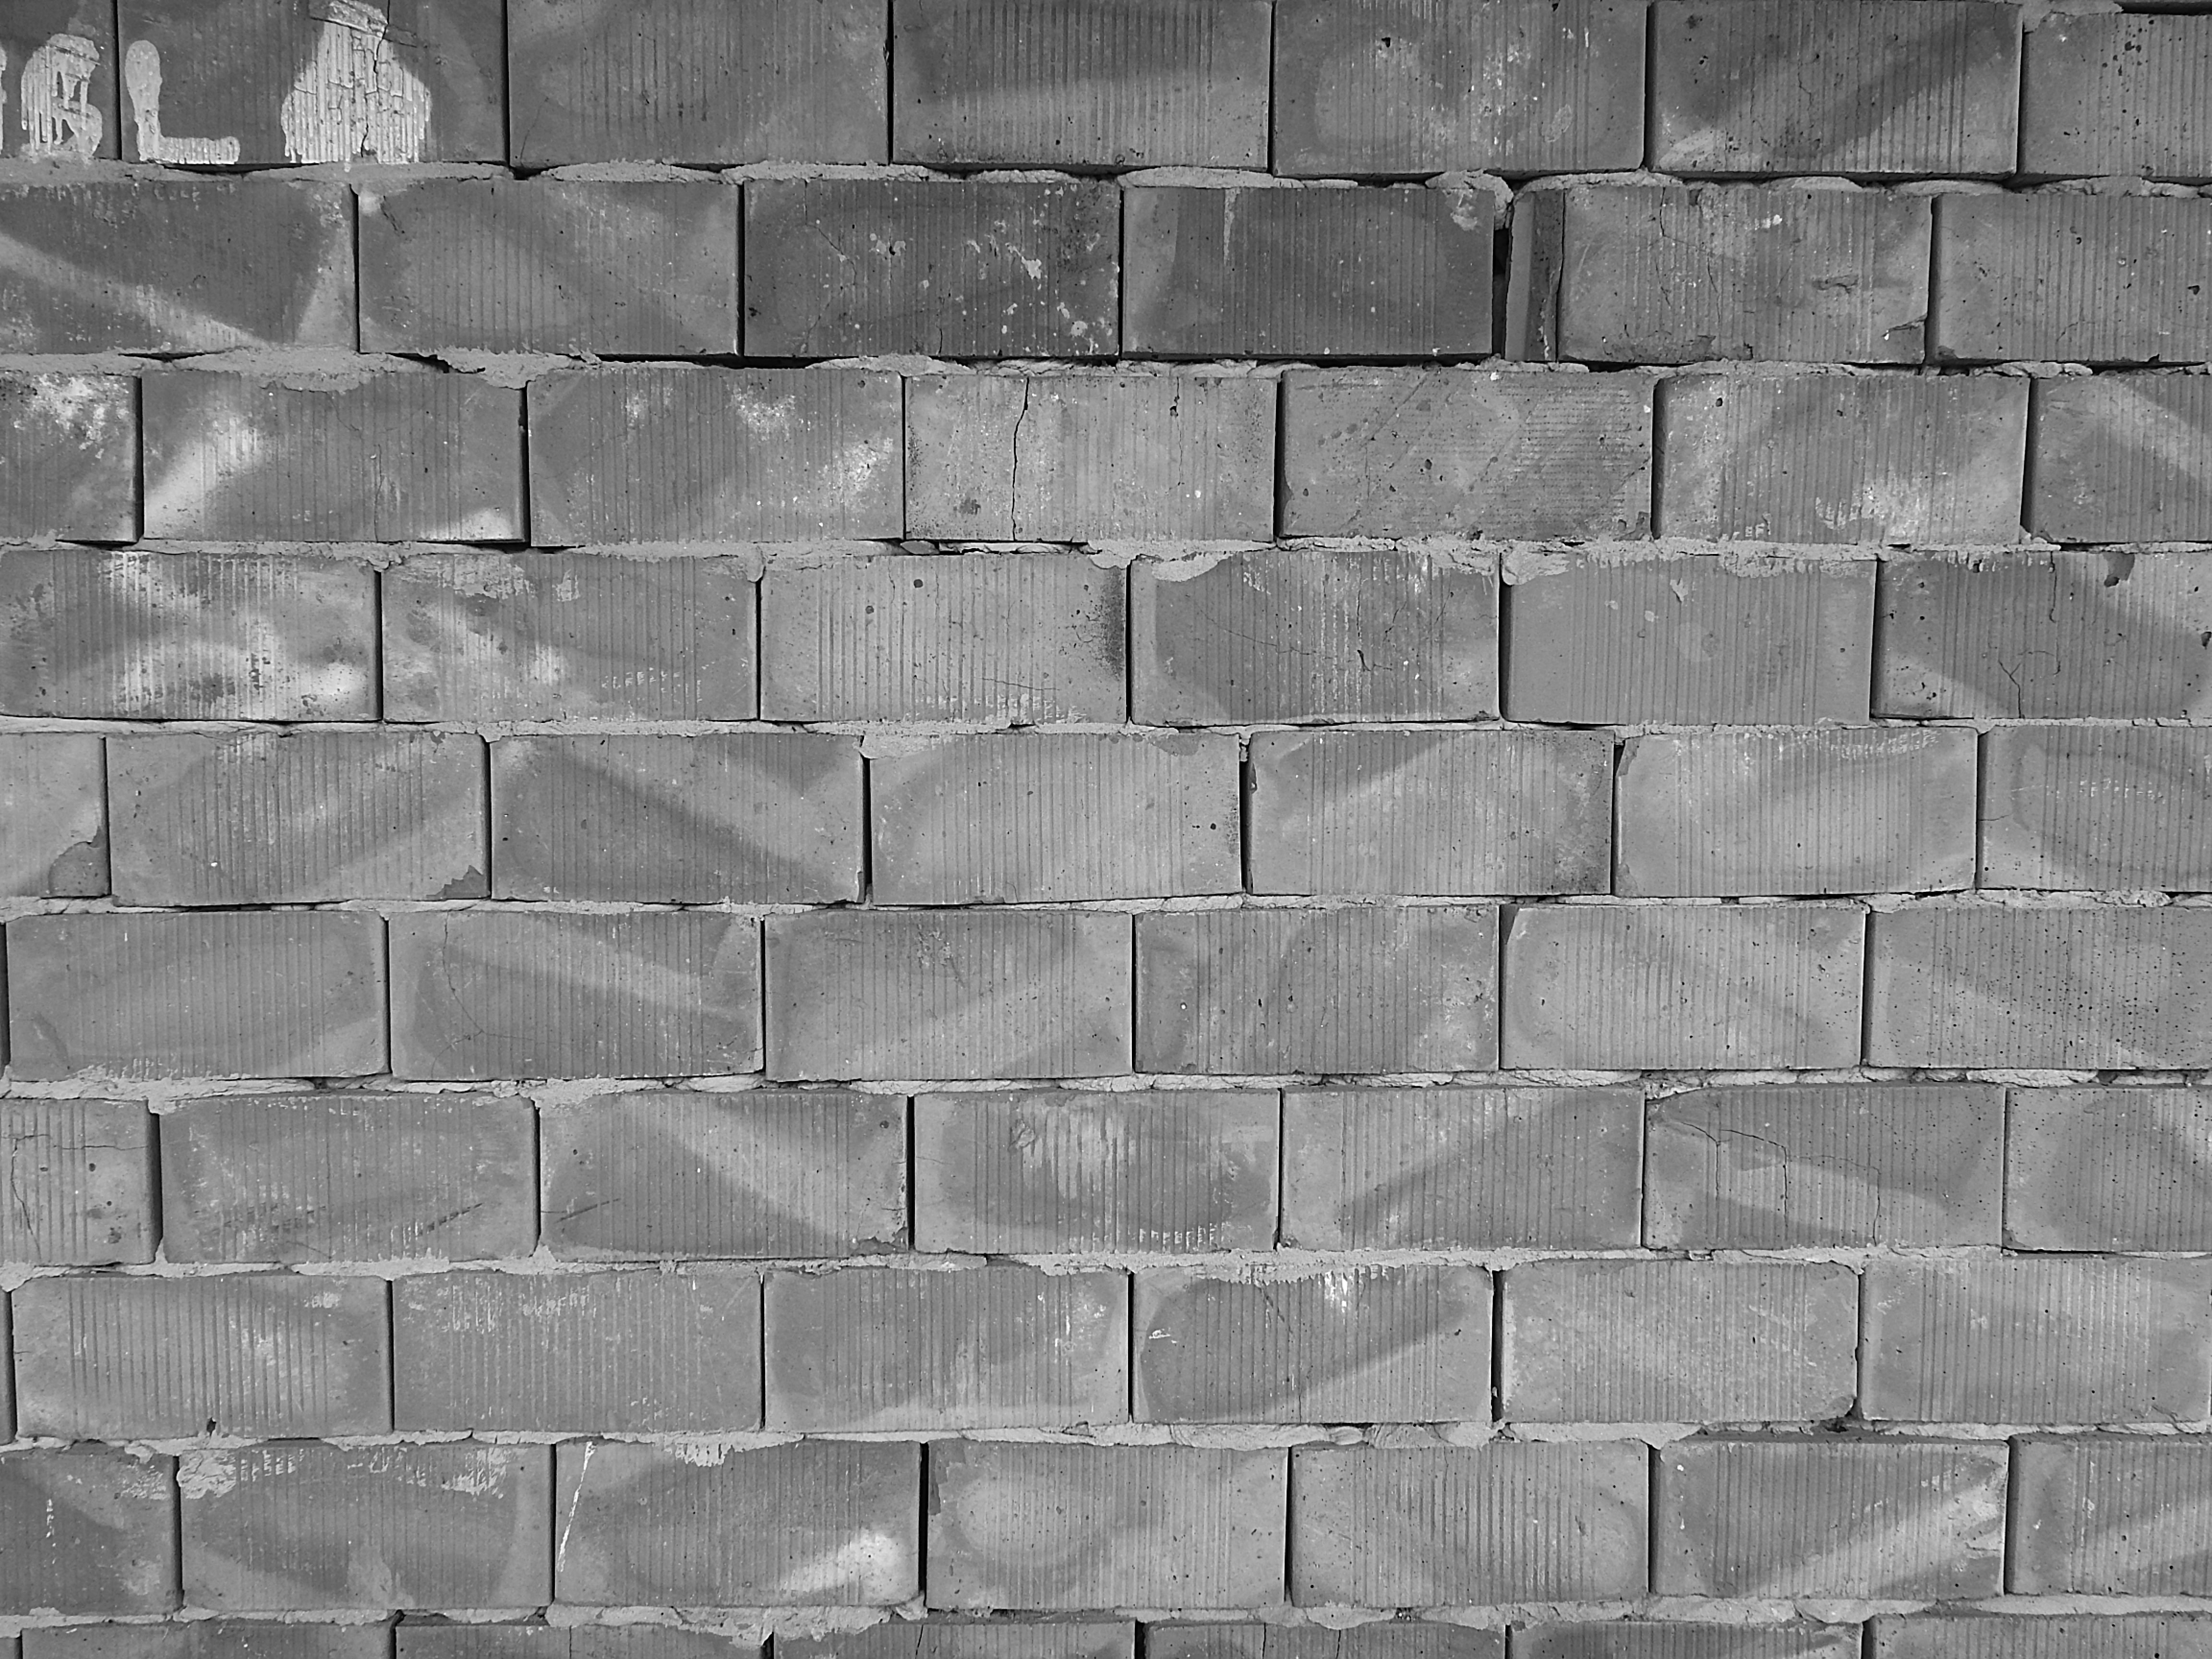 grayscale photo of brick wall